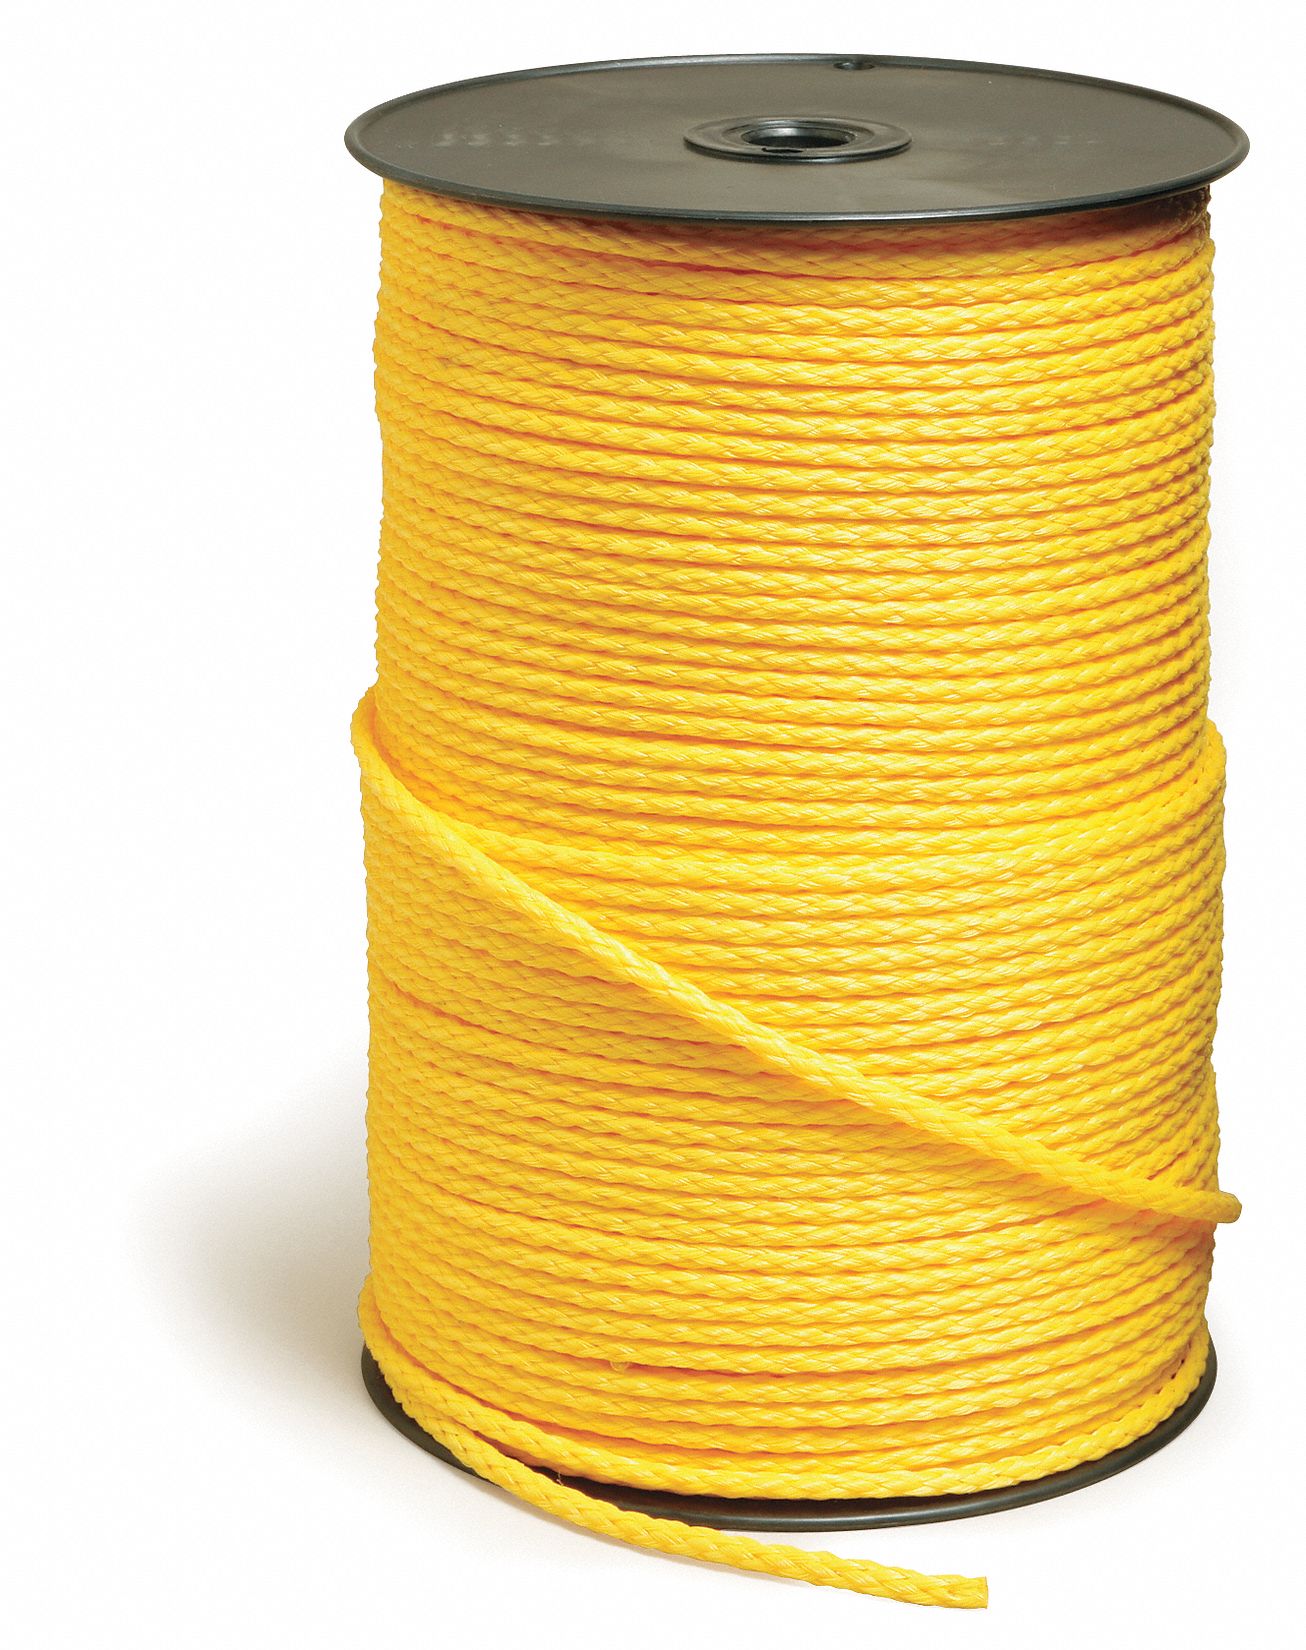 spool of 8 Strand Hollow Braid Polypropylene rope USA. 1/4" x 1000 ft Yellow 